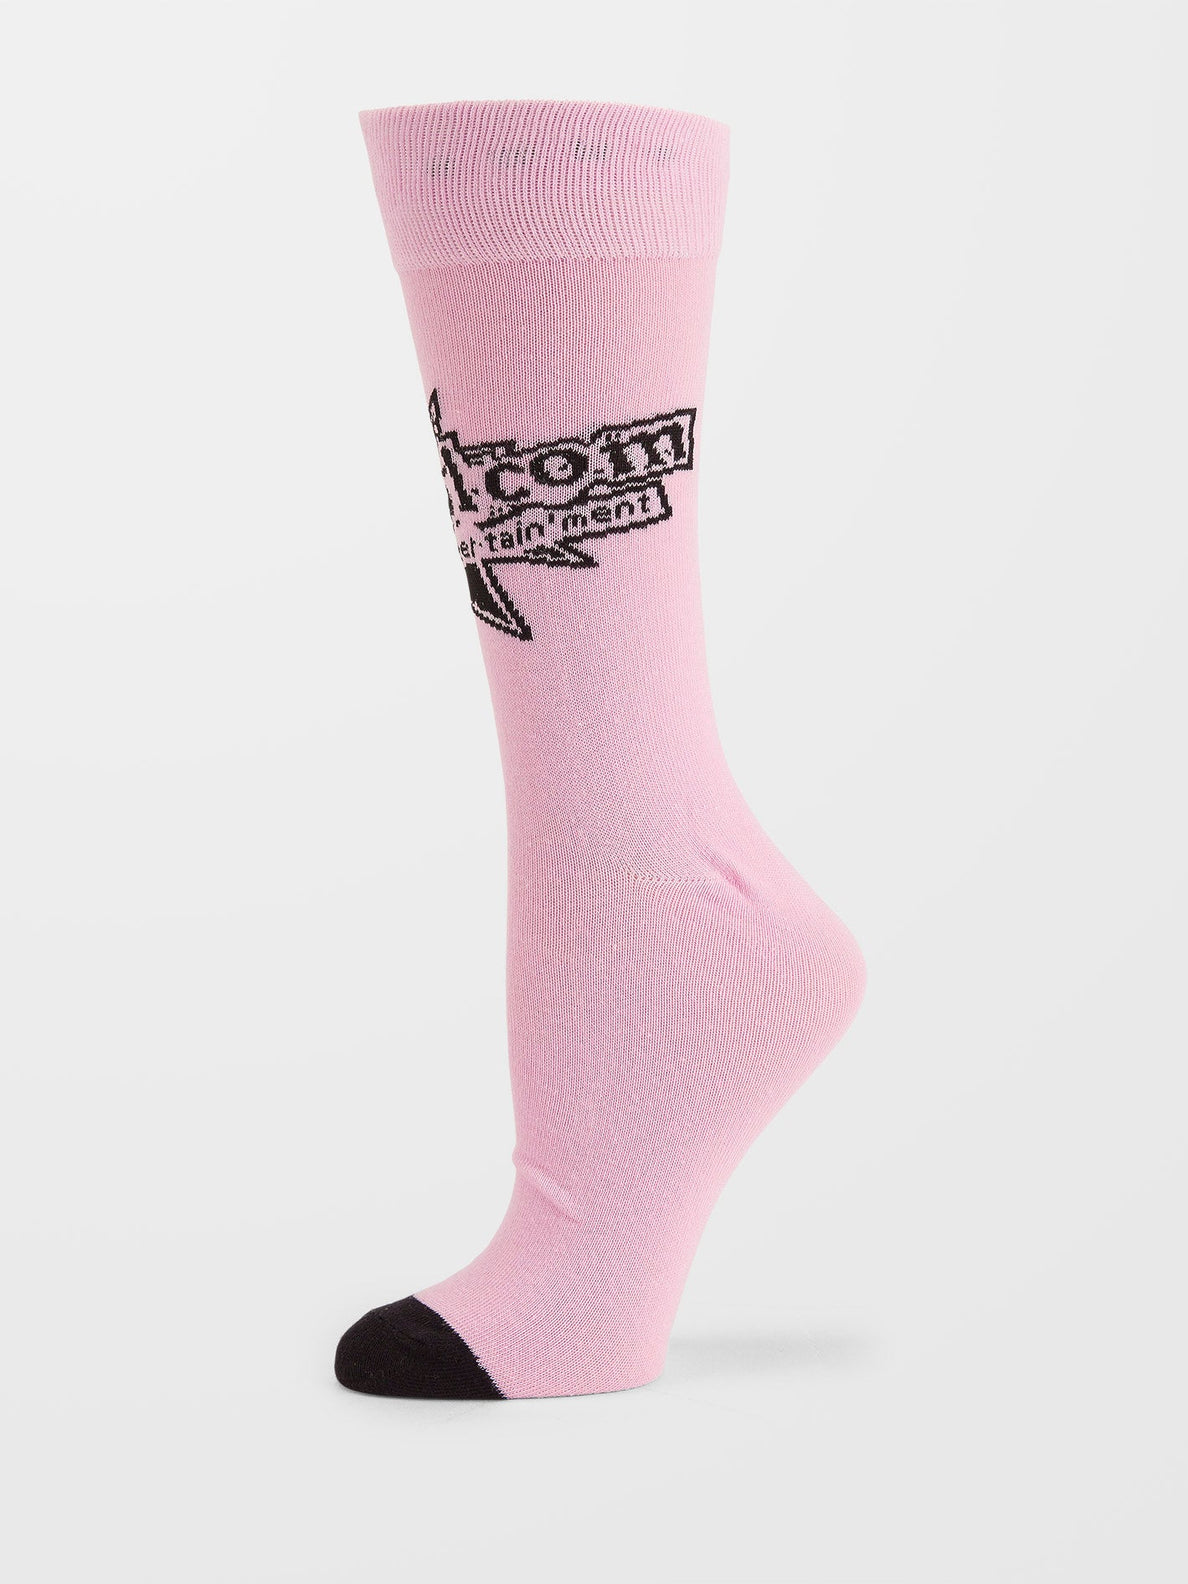 Calcetin Chica Volcom V Ent Sock Premium Reef Pink | Calcetines | Volcom Shop | surfdevils.com